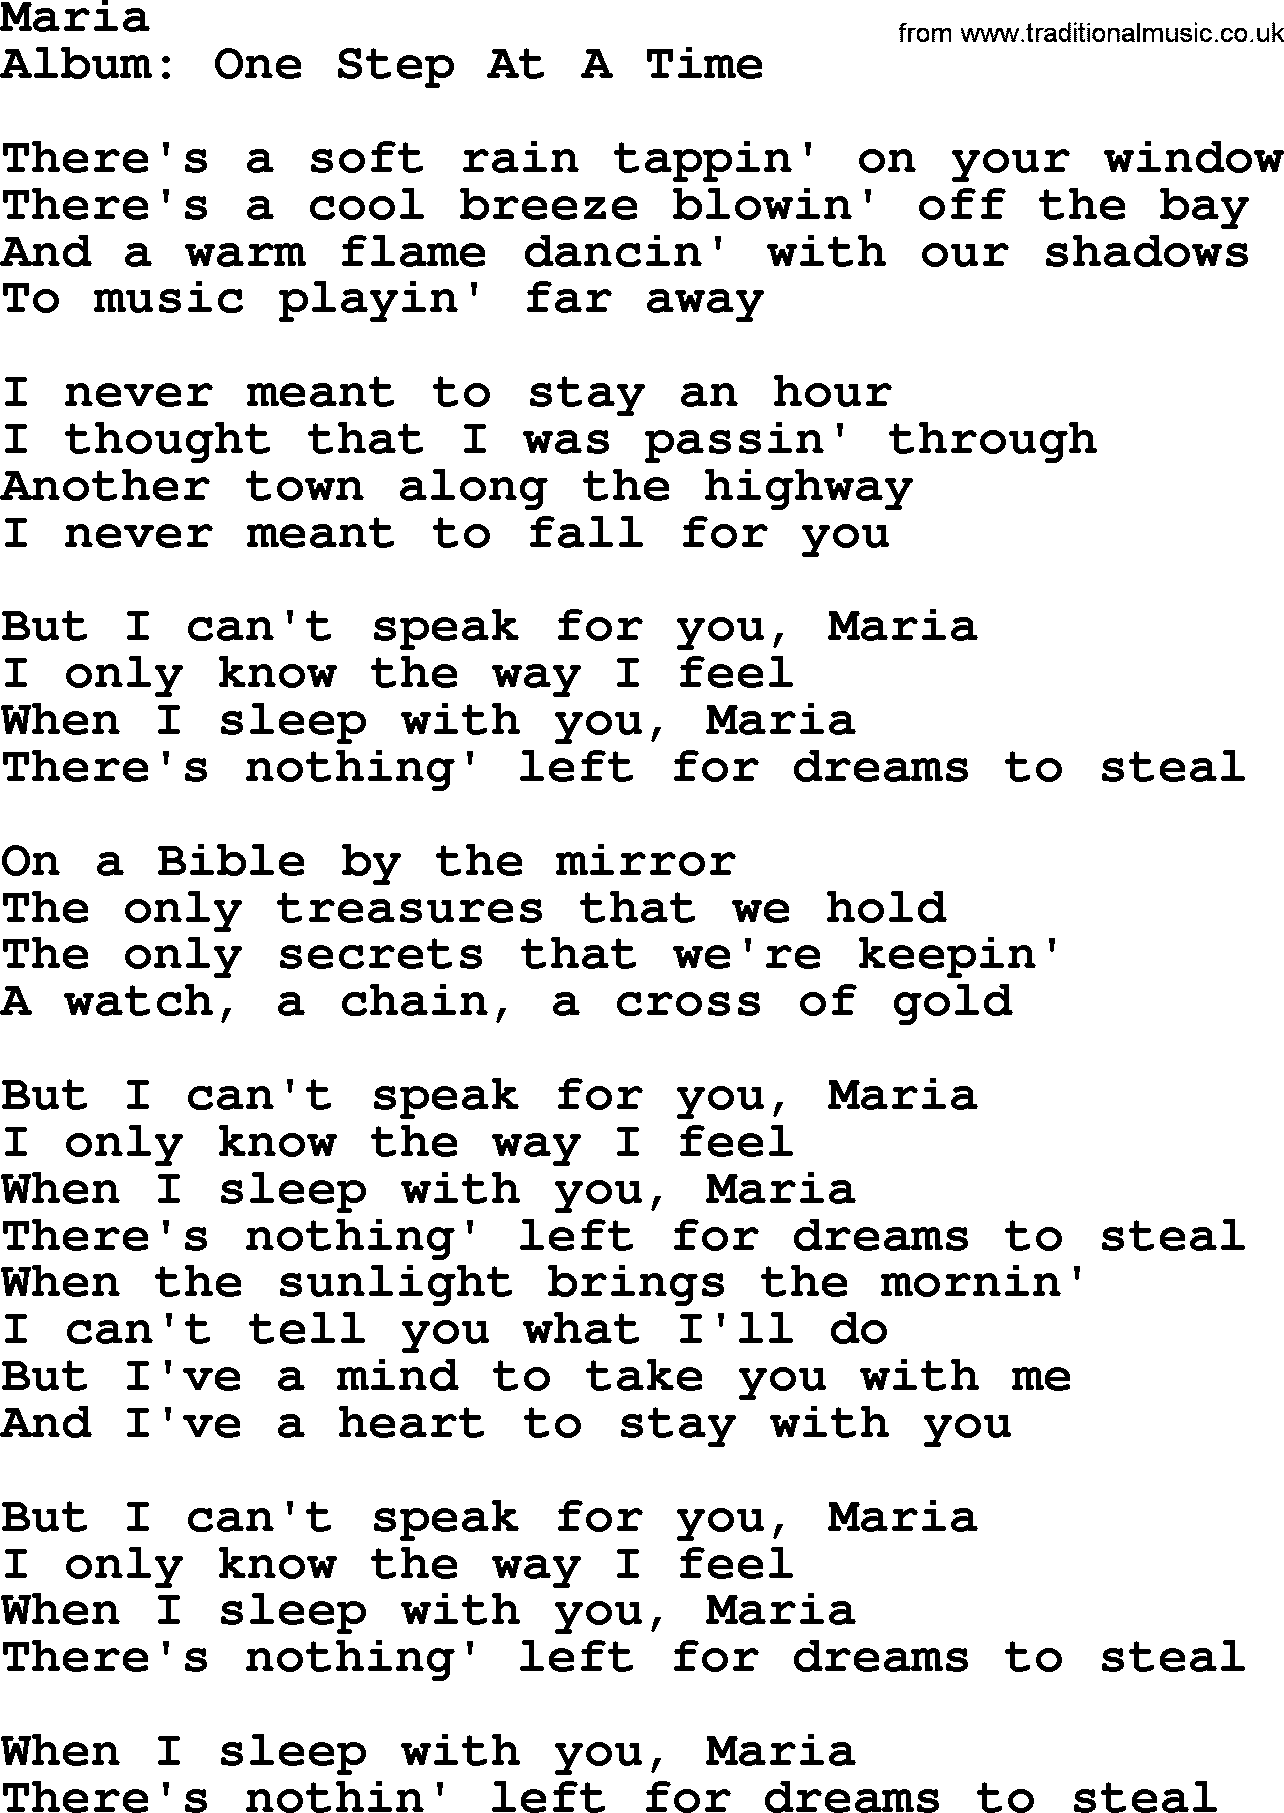 George Strait song: Maria, lyrics